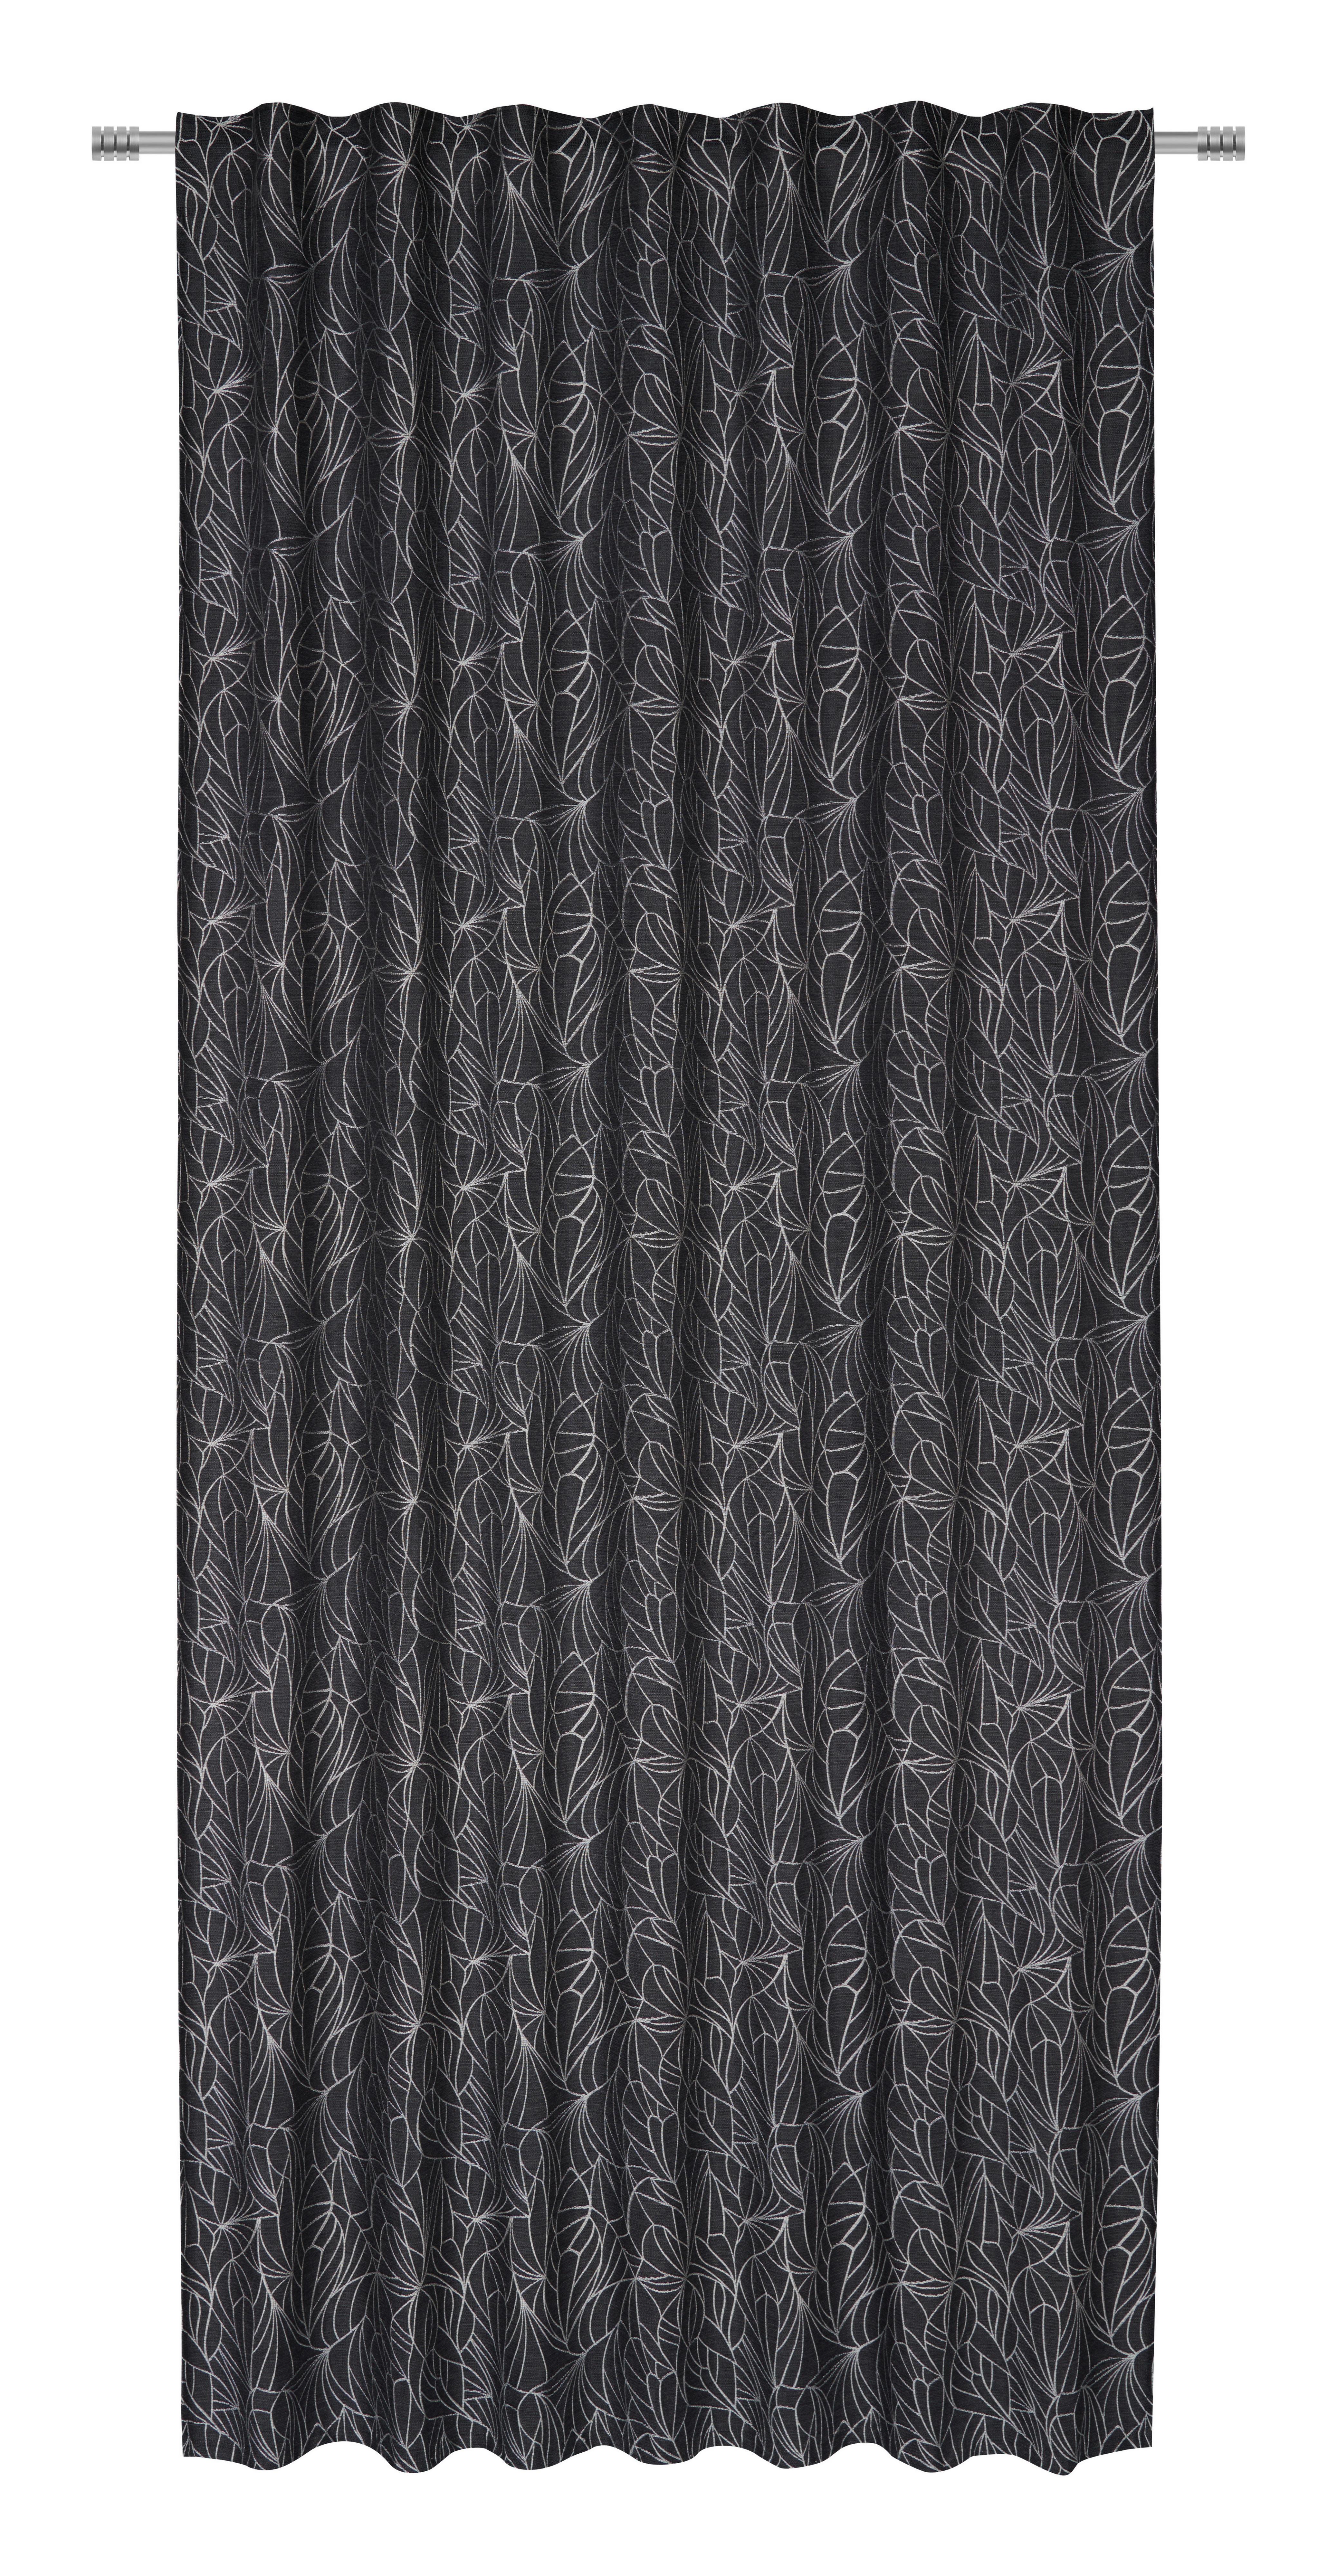 Készfüggöny Blanka - Antracit/Ezüst, romantikus/Landhaus, Textil (140/245cm) - James Wood